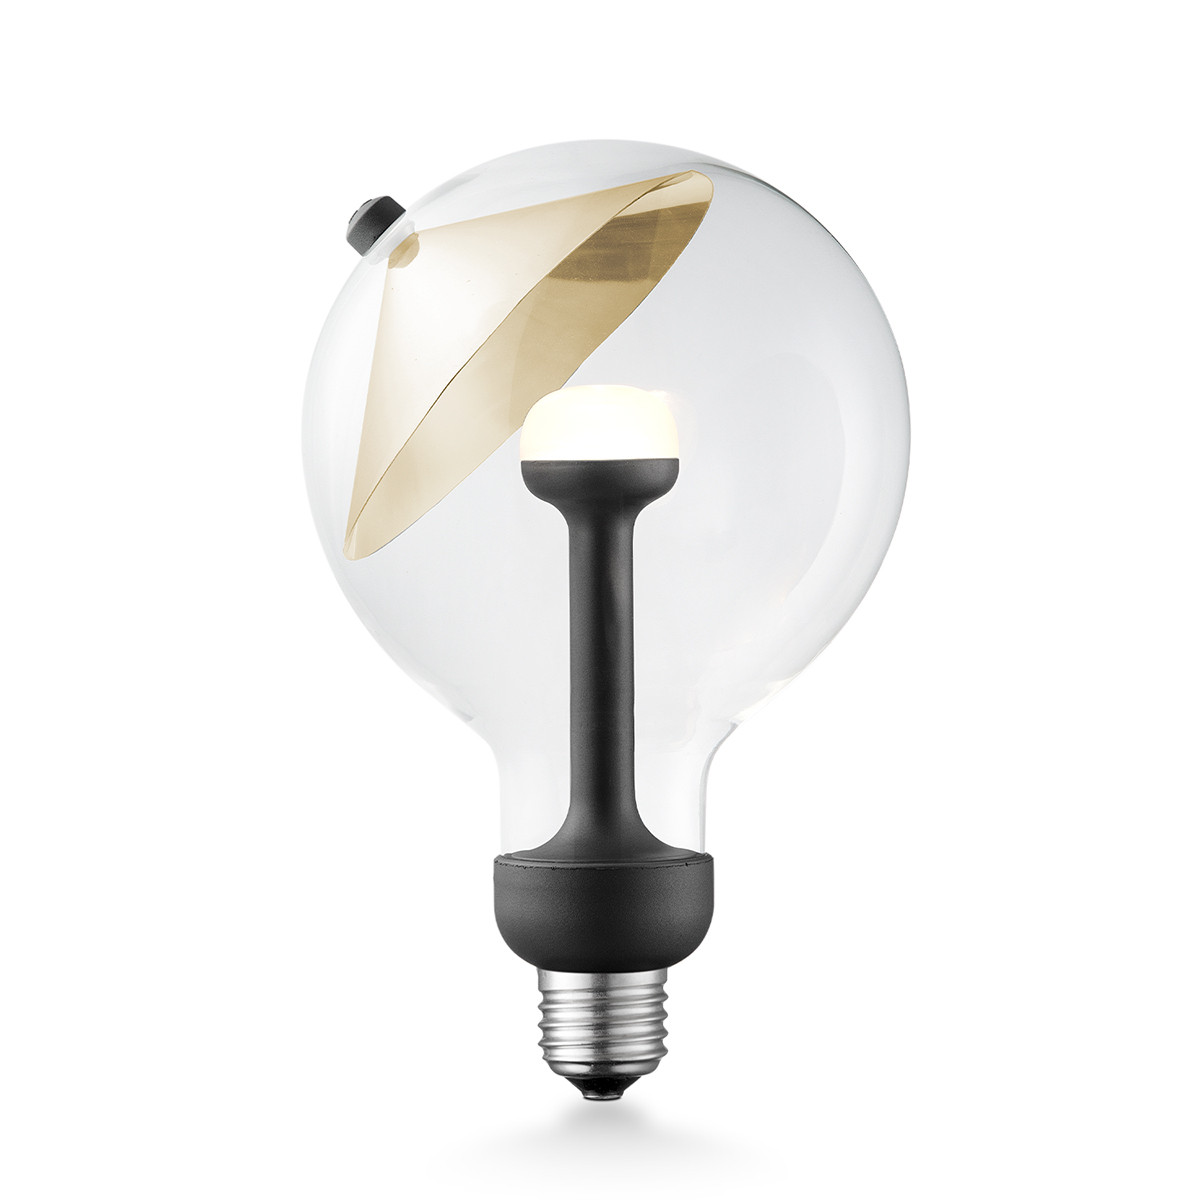 LED Lichtbron Move Me G120, Cone, 12/12/18.6cm, Goud, Design LED lamp met verstelbare diffuser via magneet, Dimbaar, 5W 400lm 2700K, warm wit licht, geschikt voor E27 fitting